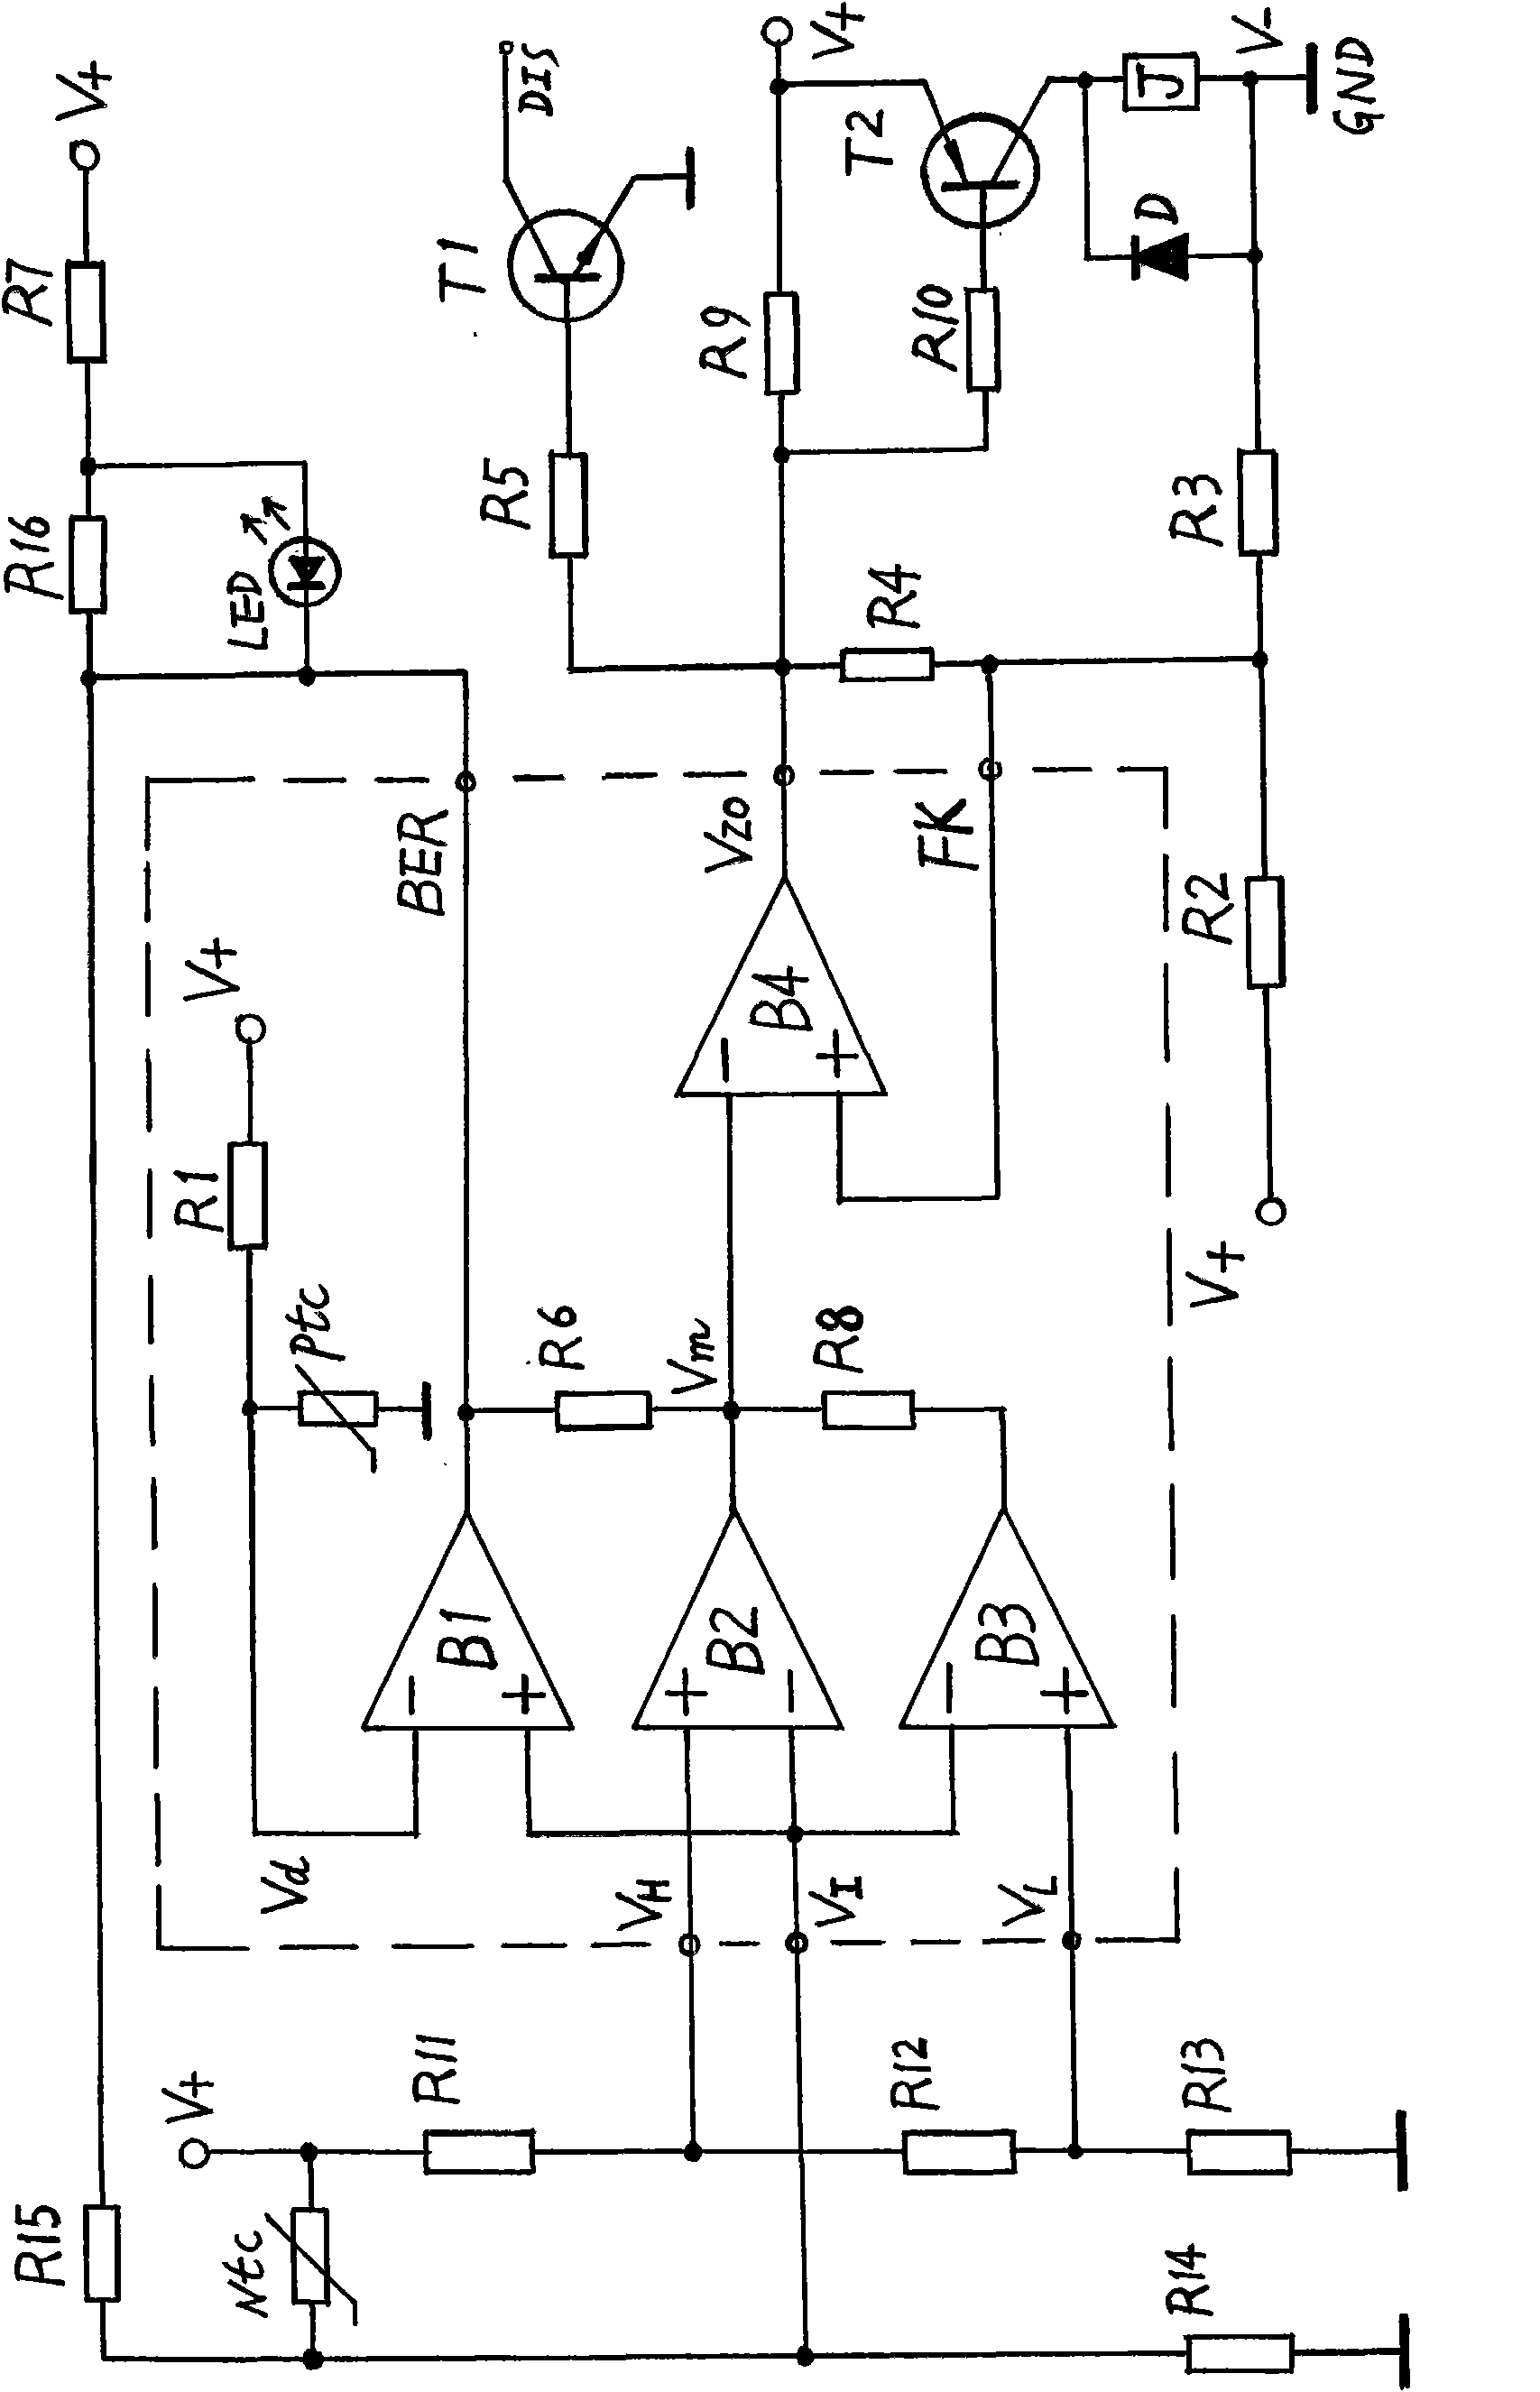 Three-limit time-base circuit